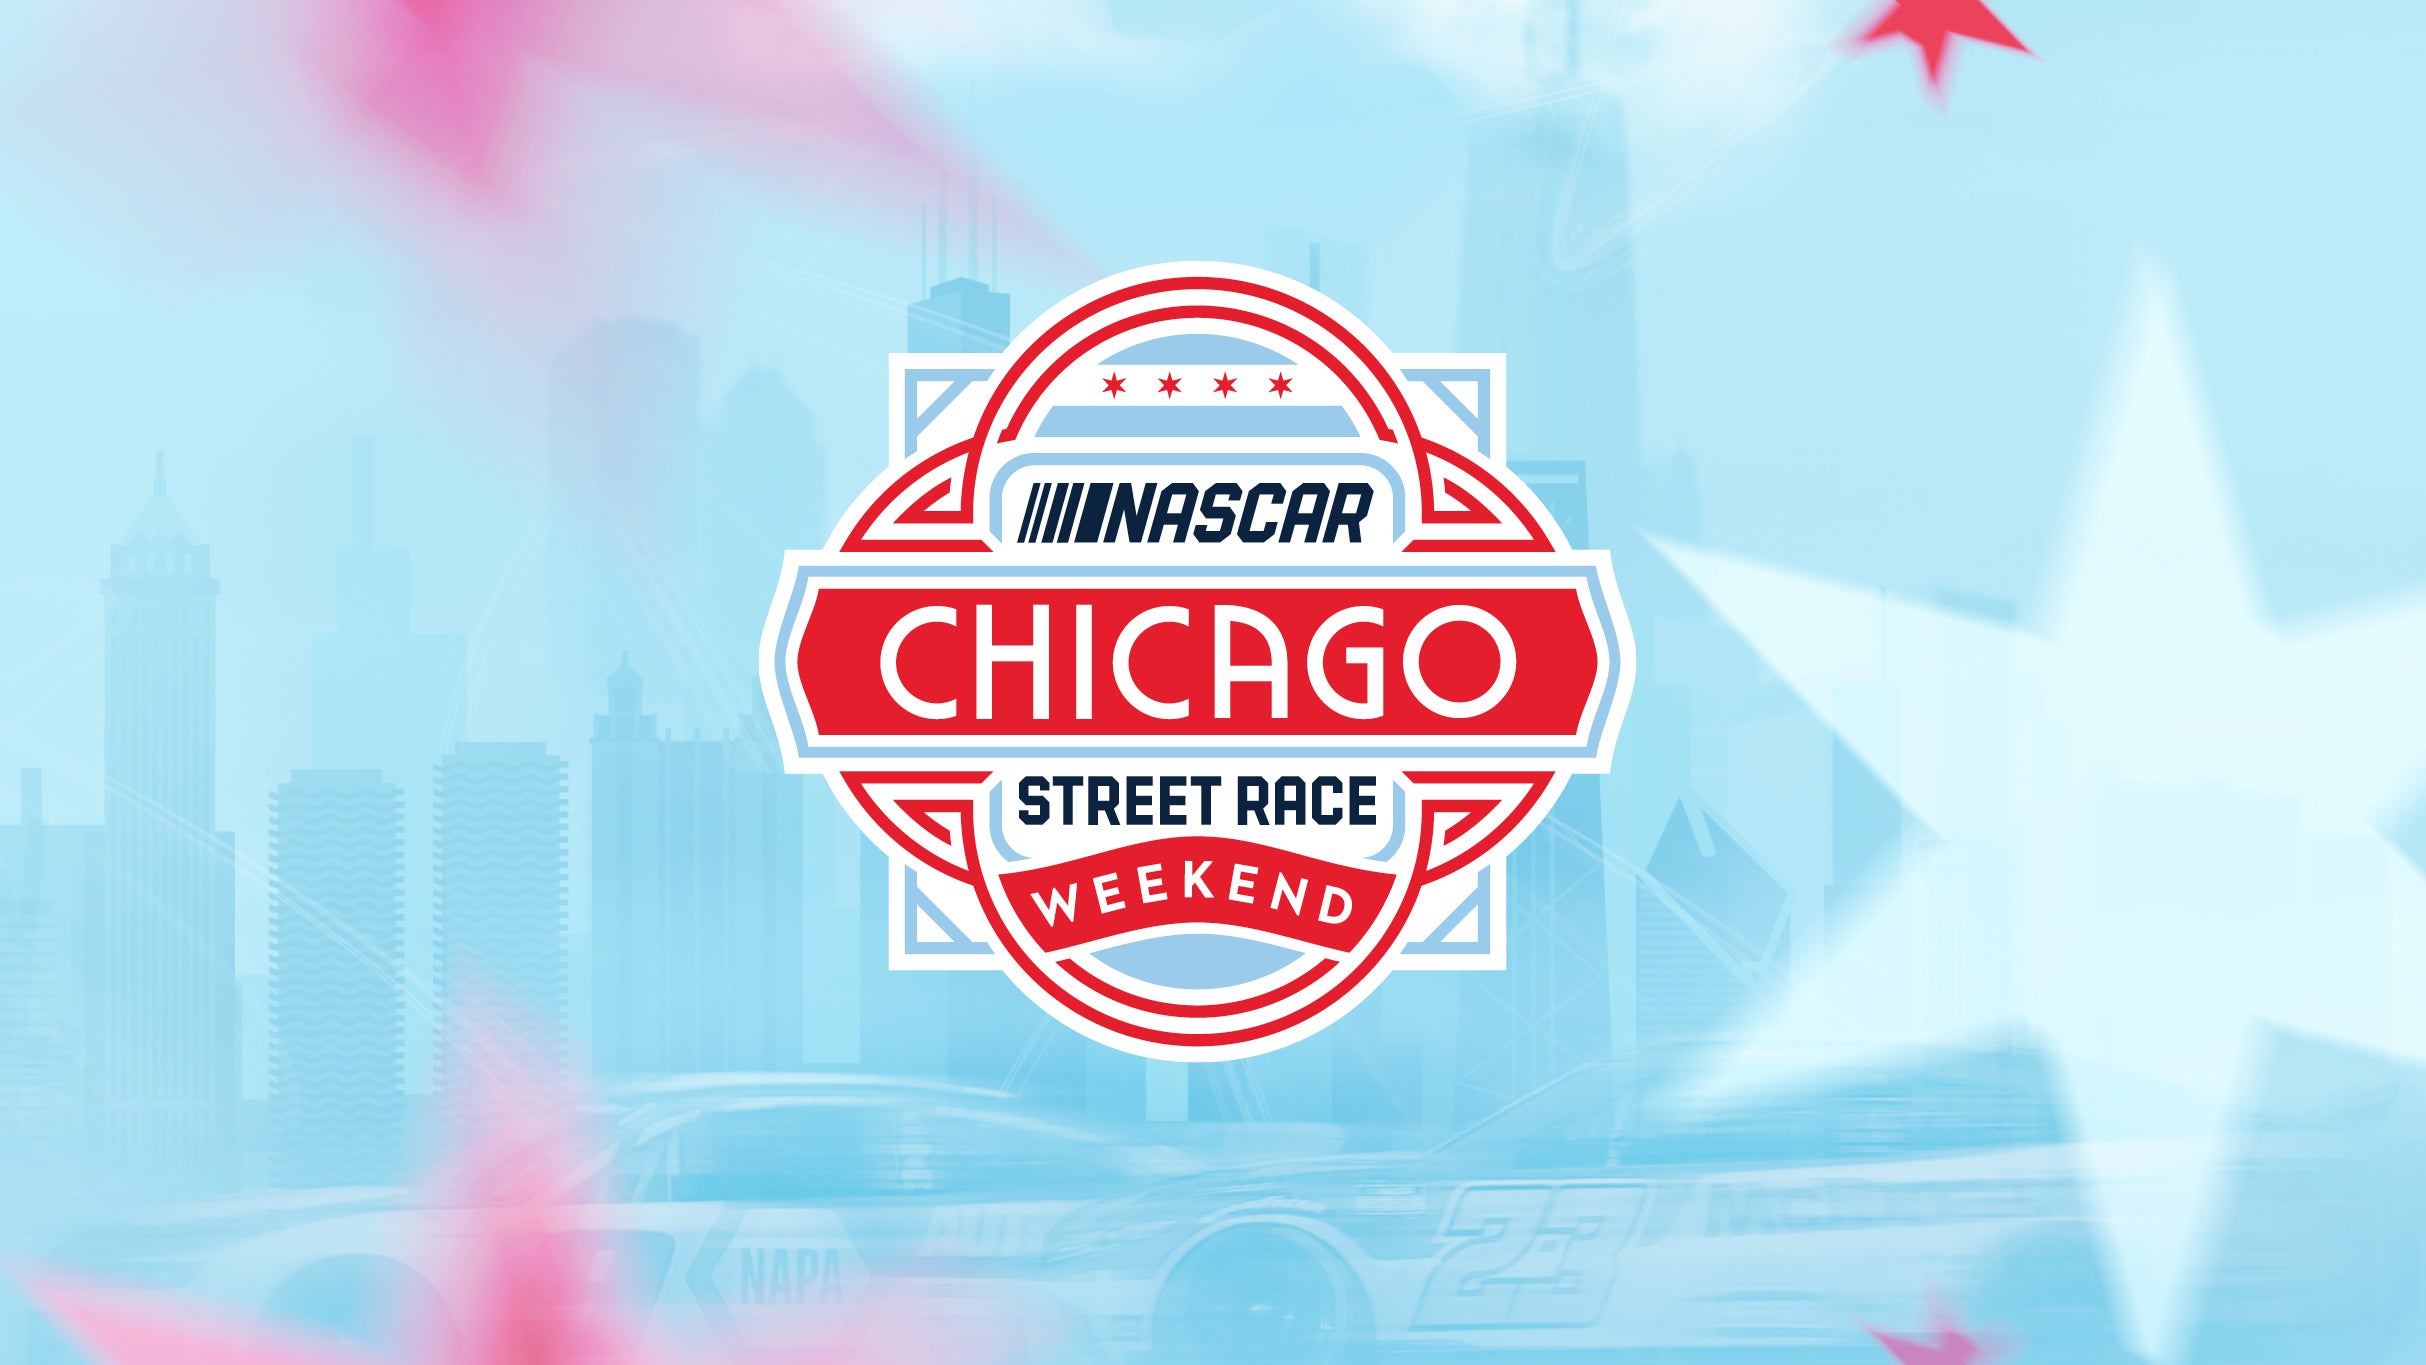 NASCAR Chicago Street Race presale information on freepresalepasswords.com